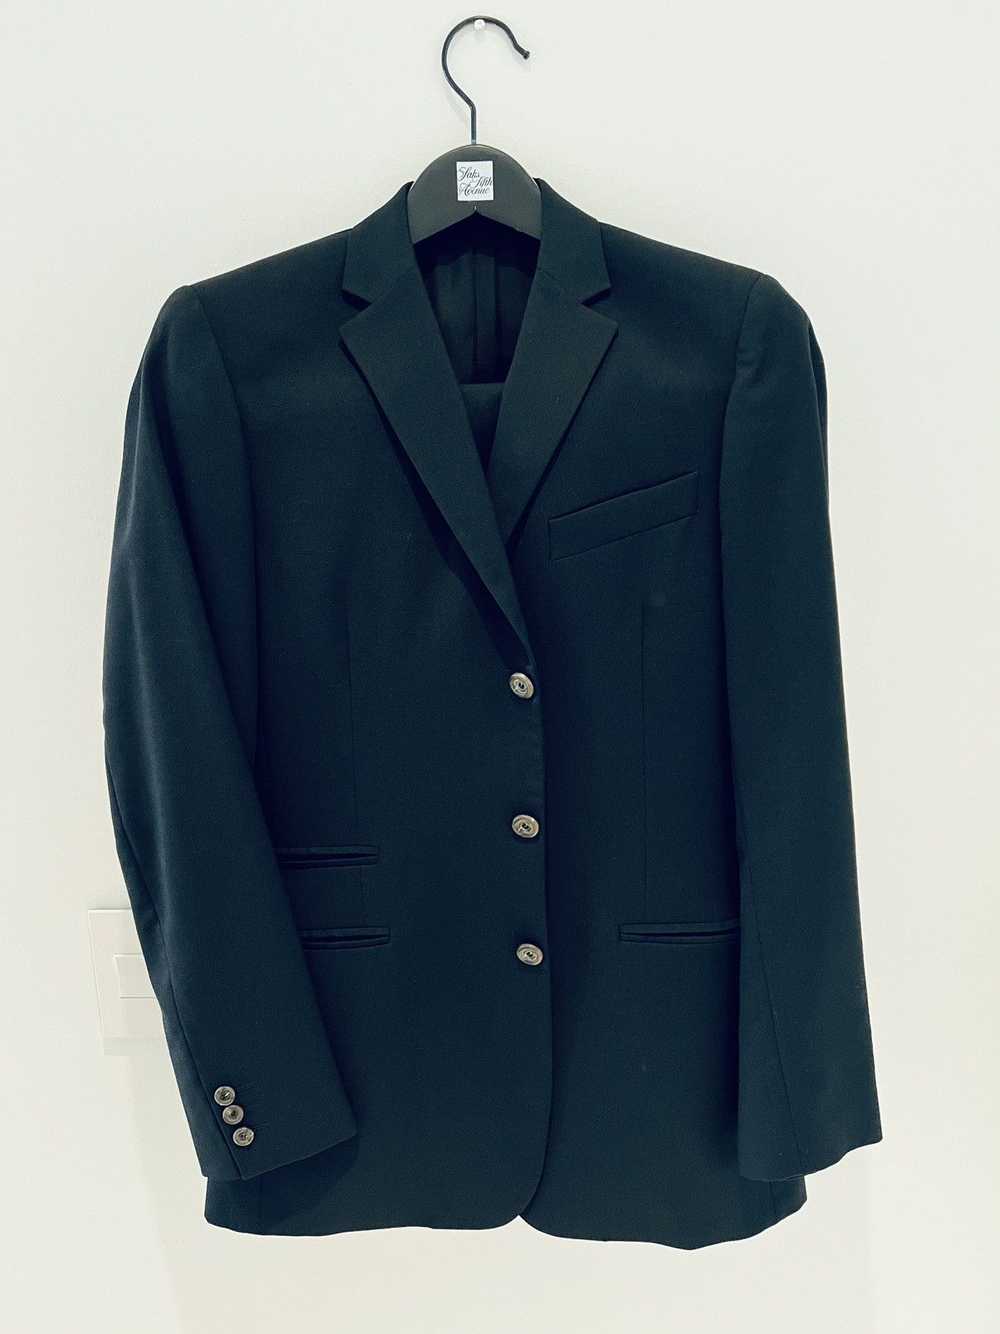 Dolce & Gabbana Dolce & Gabbana black wool suit - image 1